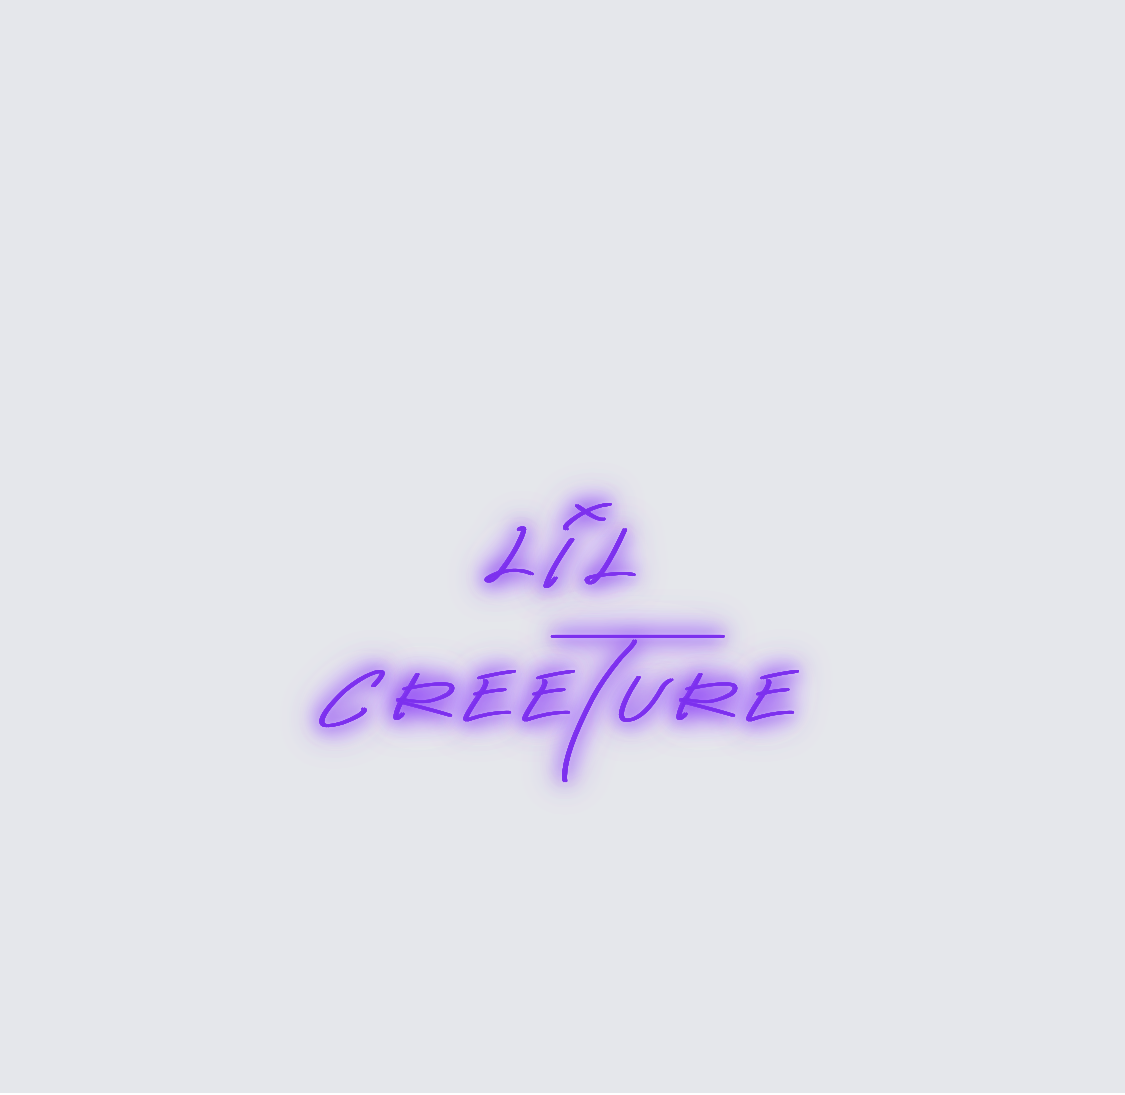 Custom neon sign - Lil       Creeture